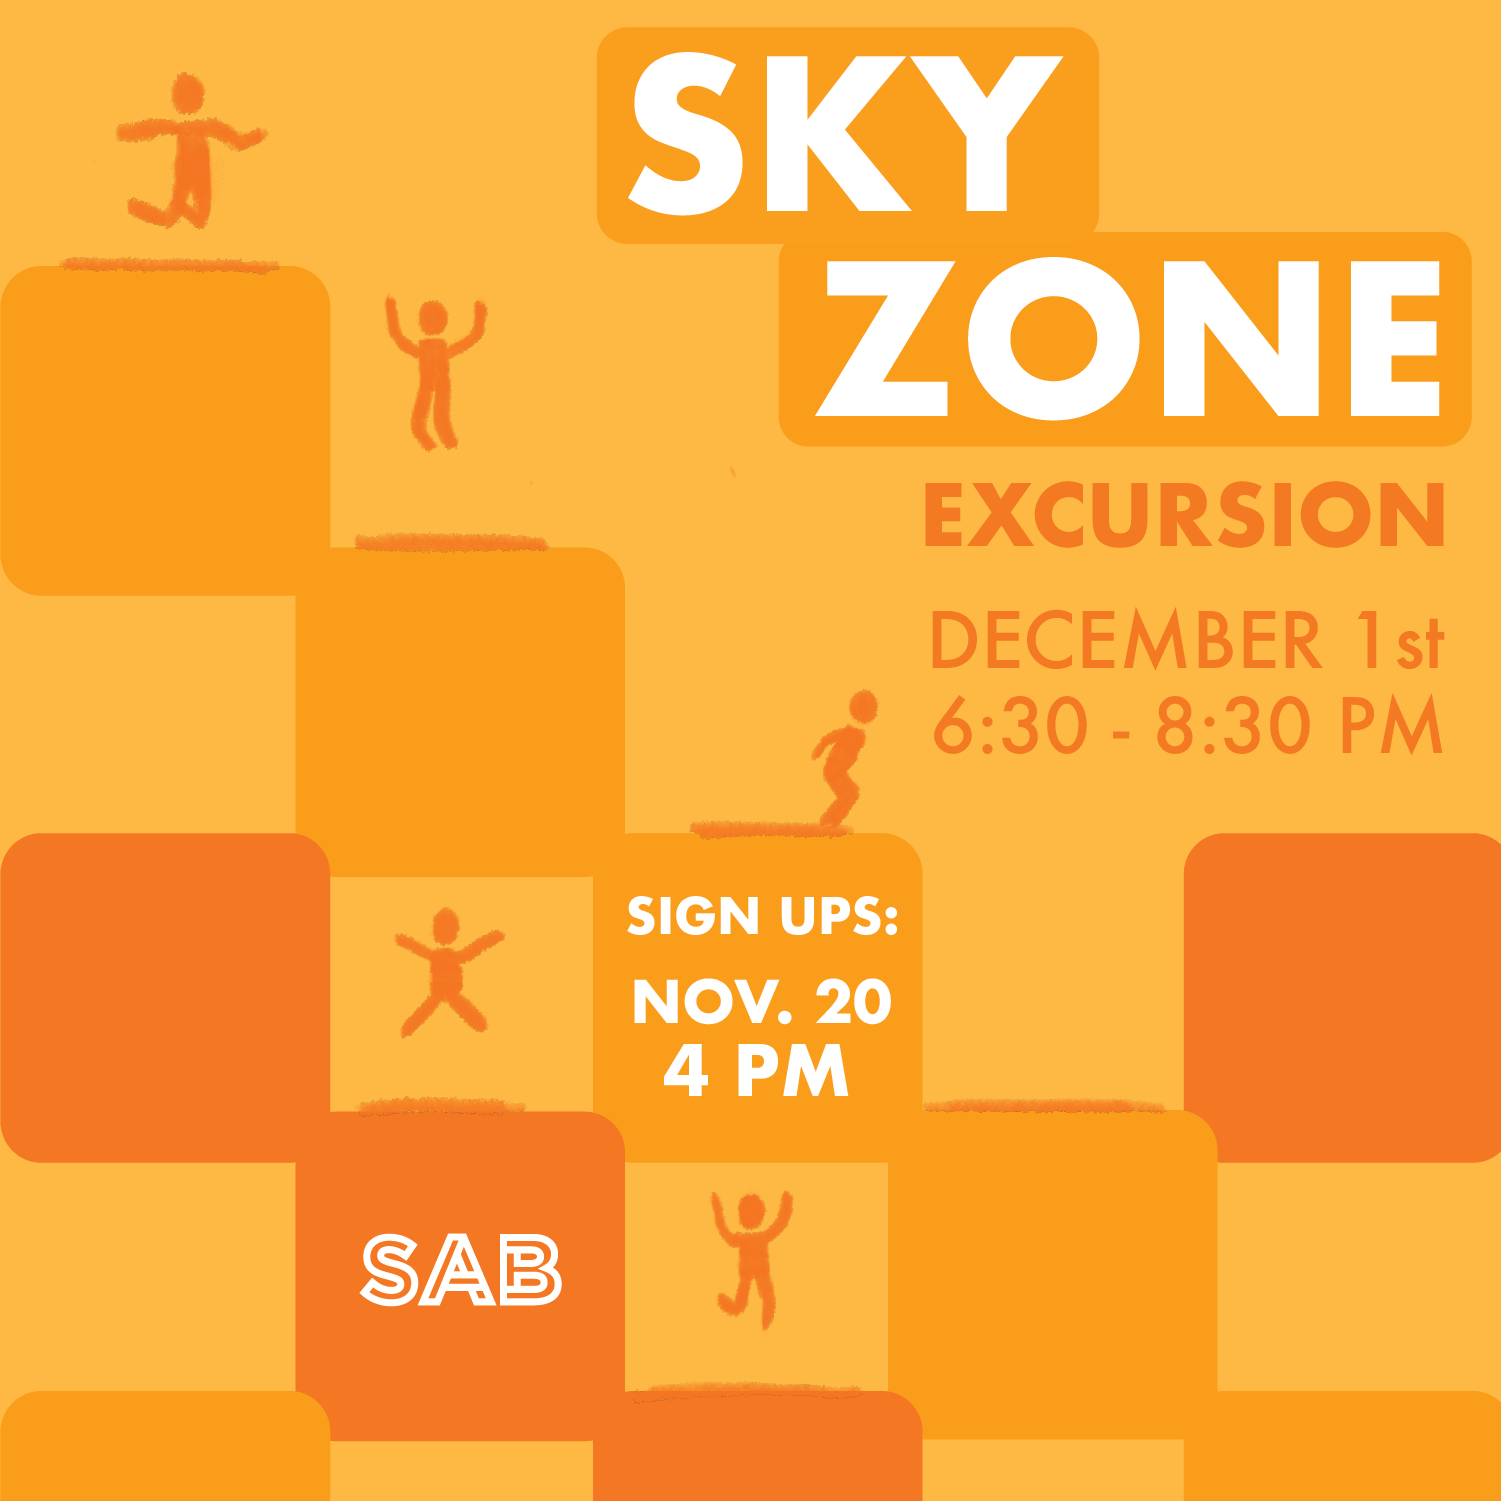 Skyzone excursion poster